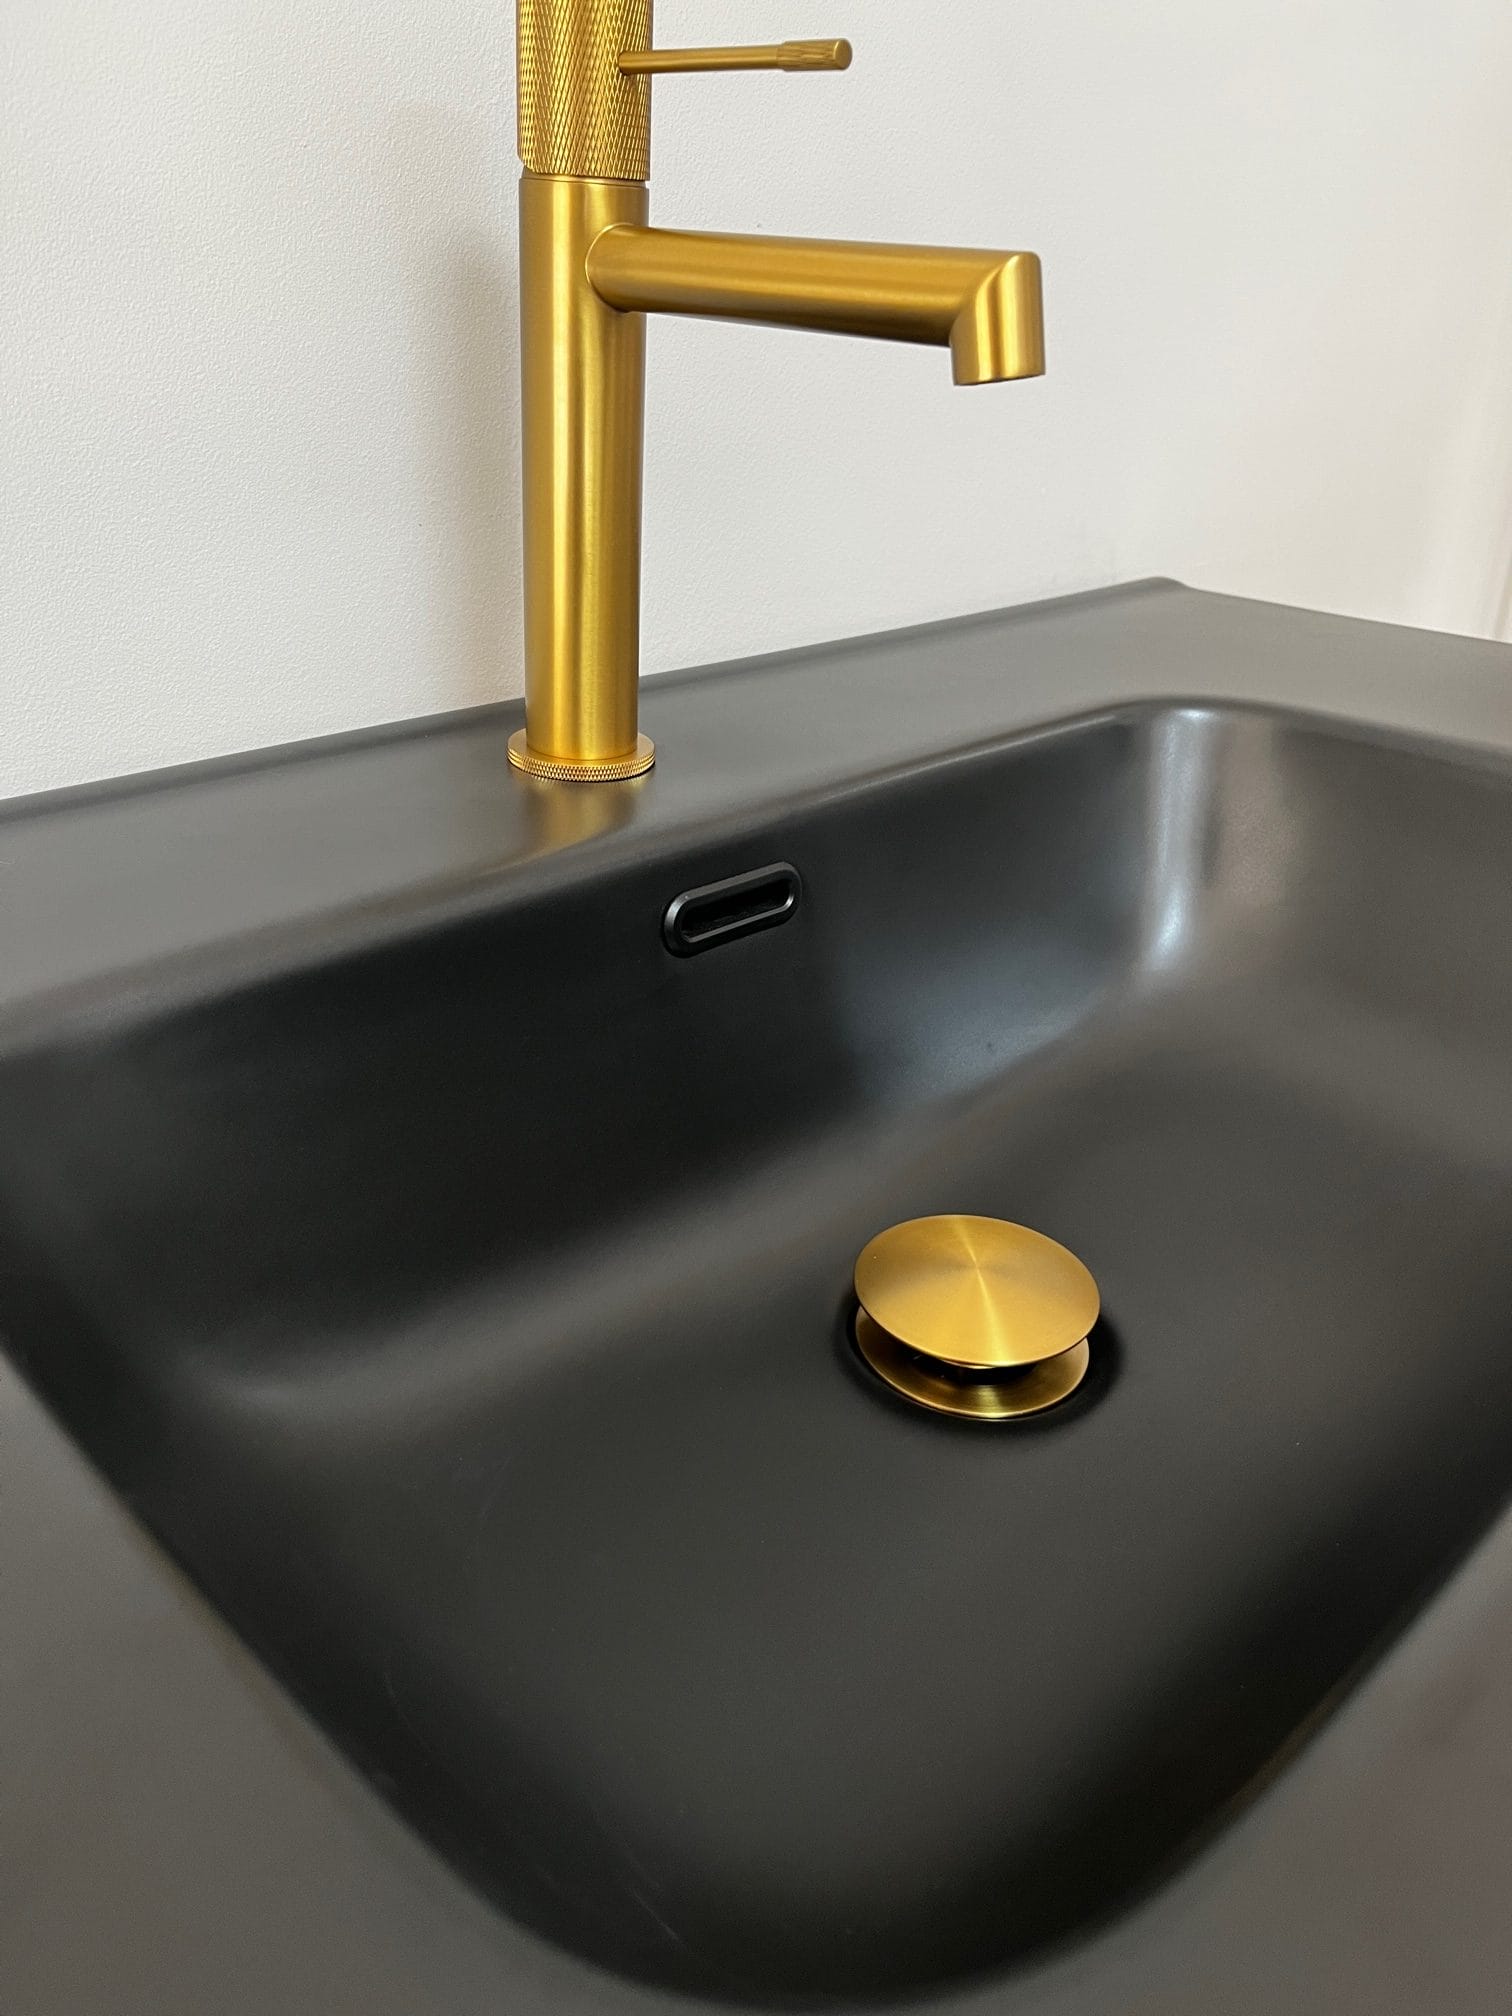 Comprar Sifón + válvula click clack de lavabo dorado cepillado